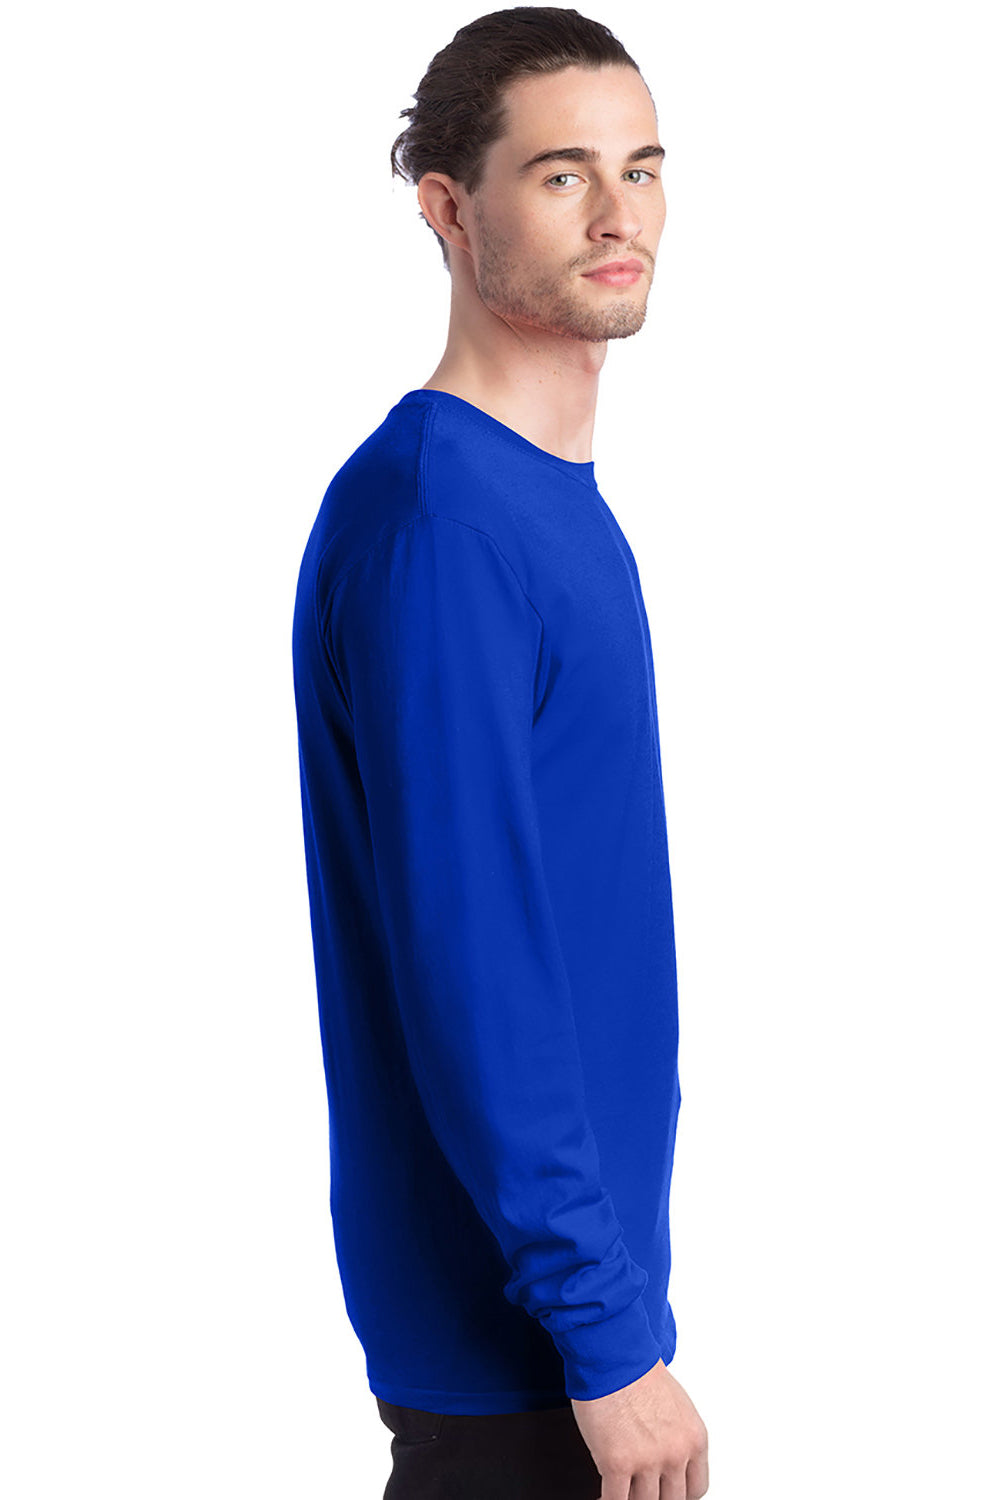 Hanes 5286 Mens ComfortSoft Long Sleeve Crewneck T-Shirt Athletic Royal Blue SIde